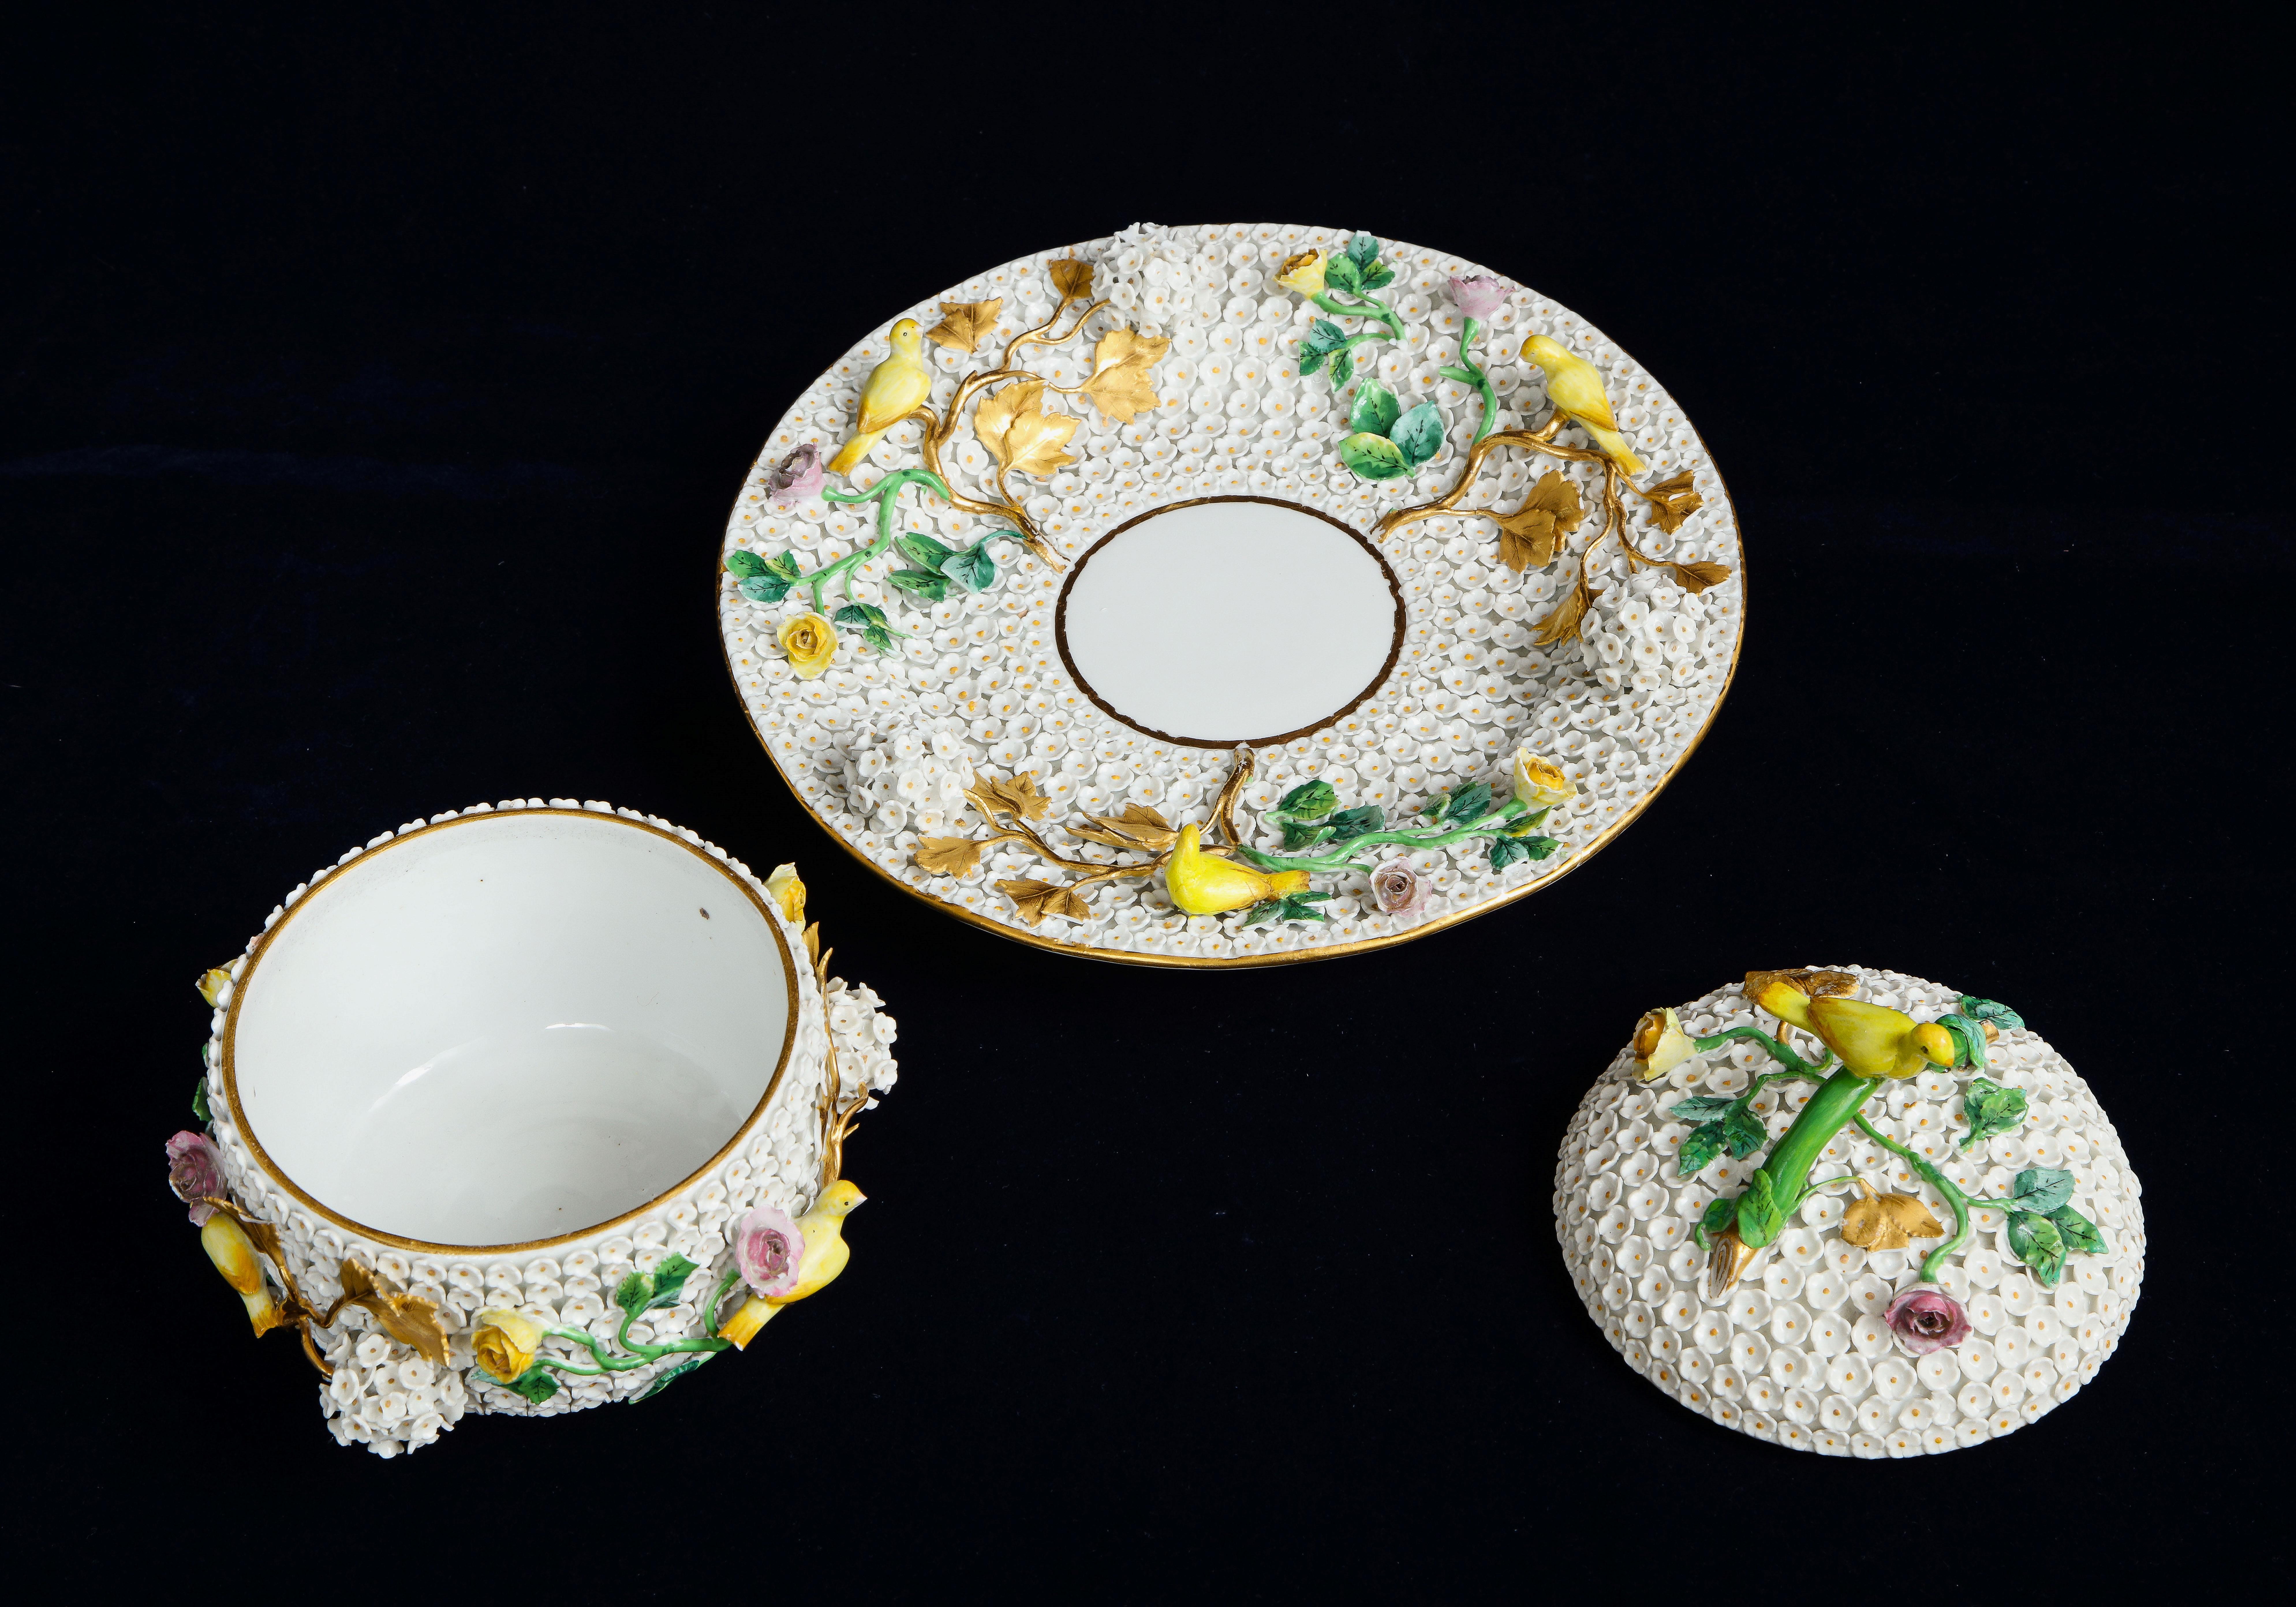 Rare 19th C. Meissen ‘Schneeballen’ 'Snowball' Covered Bowl & Plate W/ Birds For Sale 1